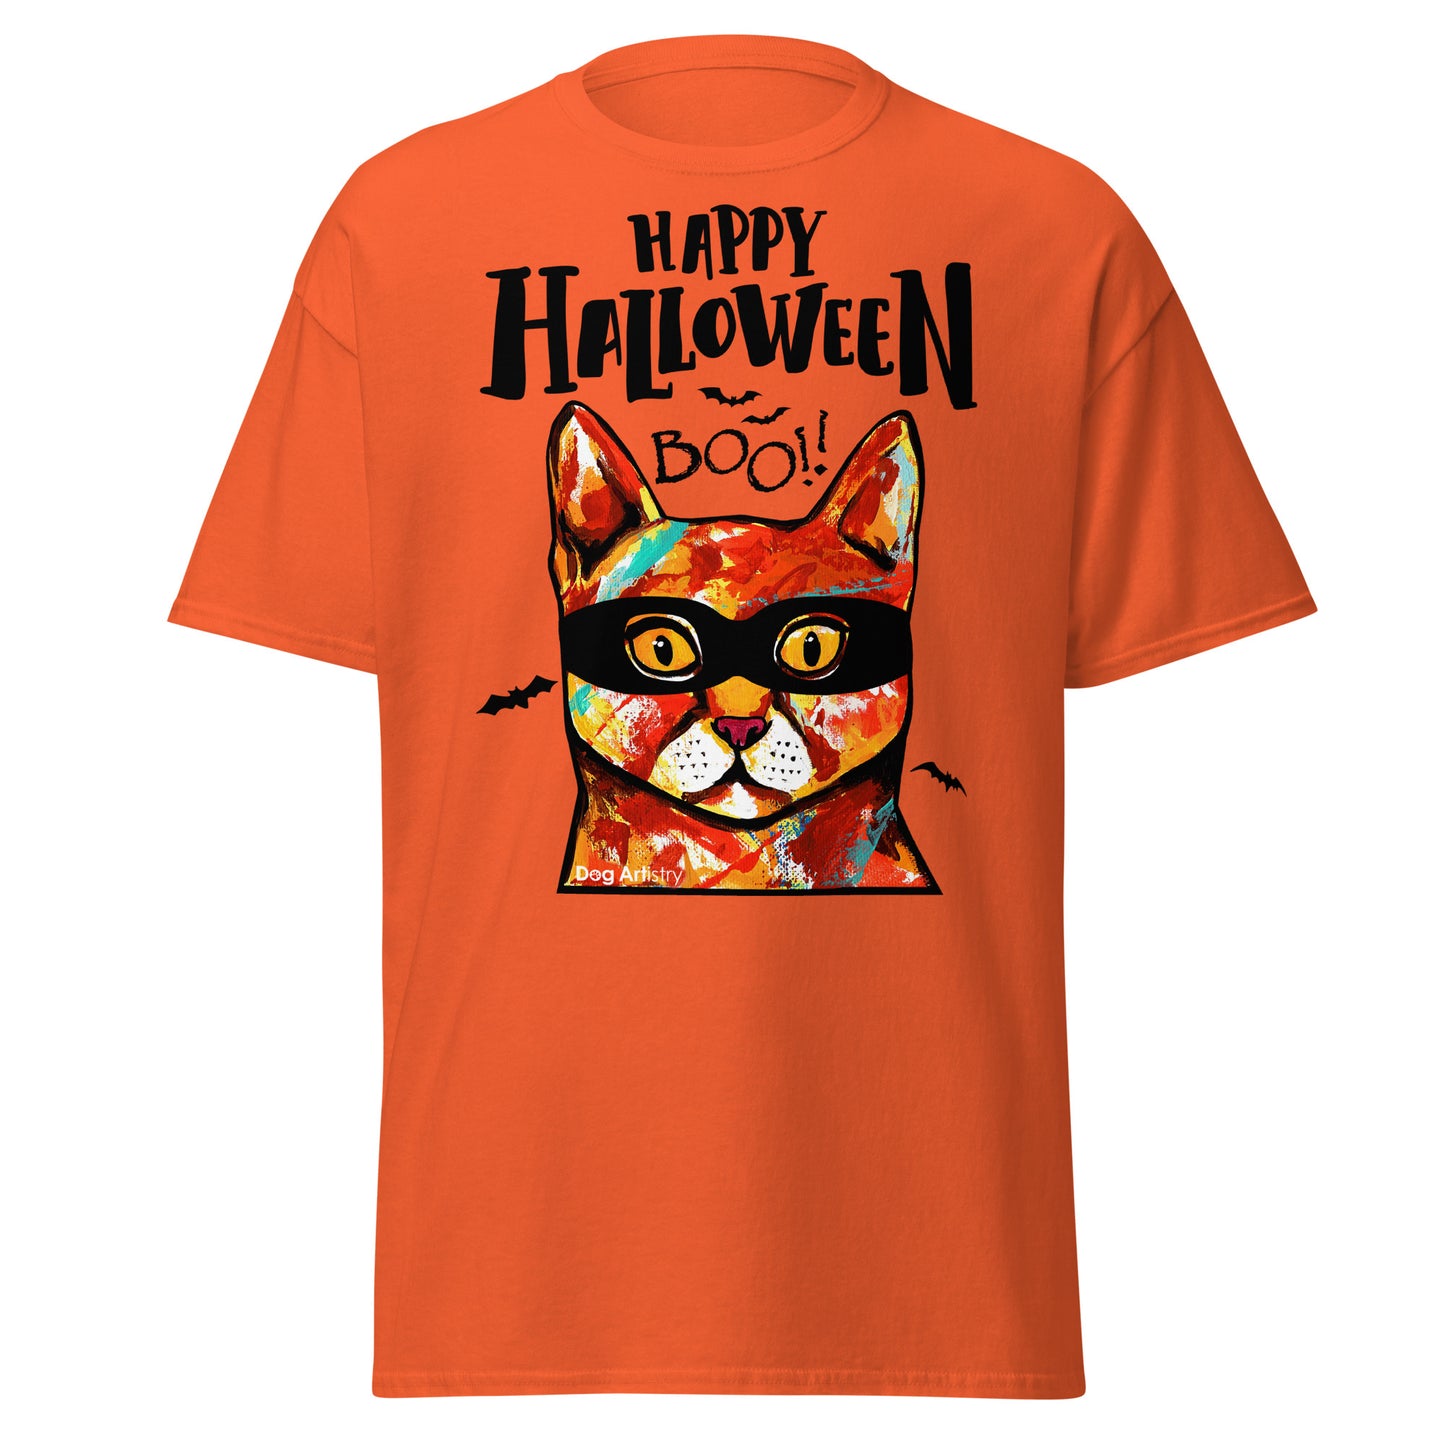 Funny Happy Halloween Cat wearing mask men’s orange t-shirt by Dog Artistry.